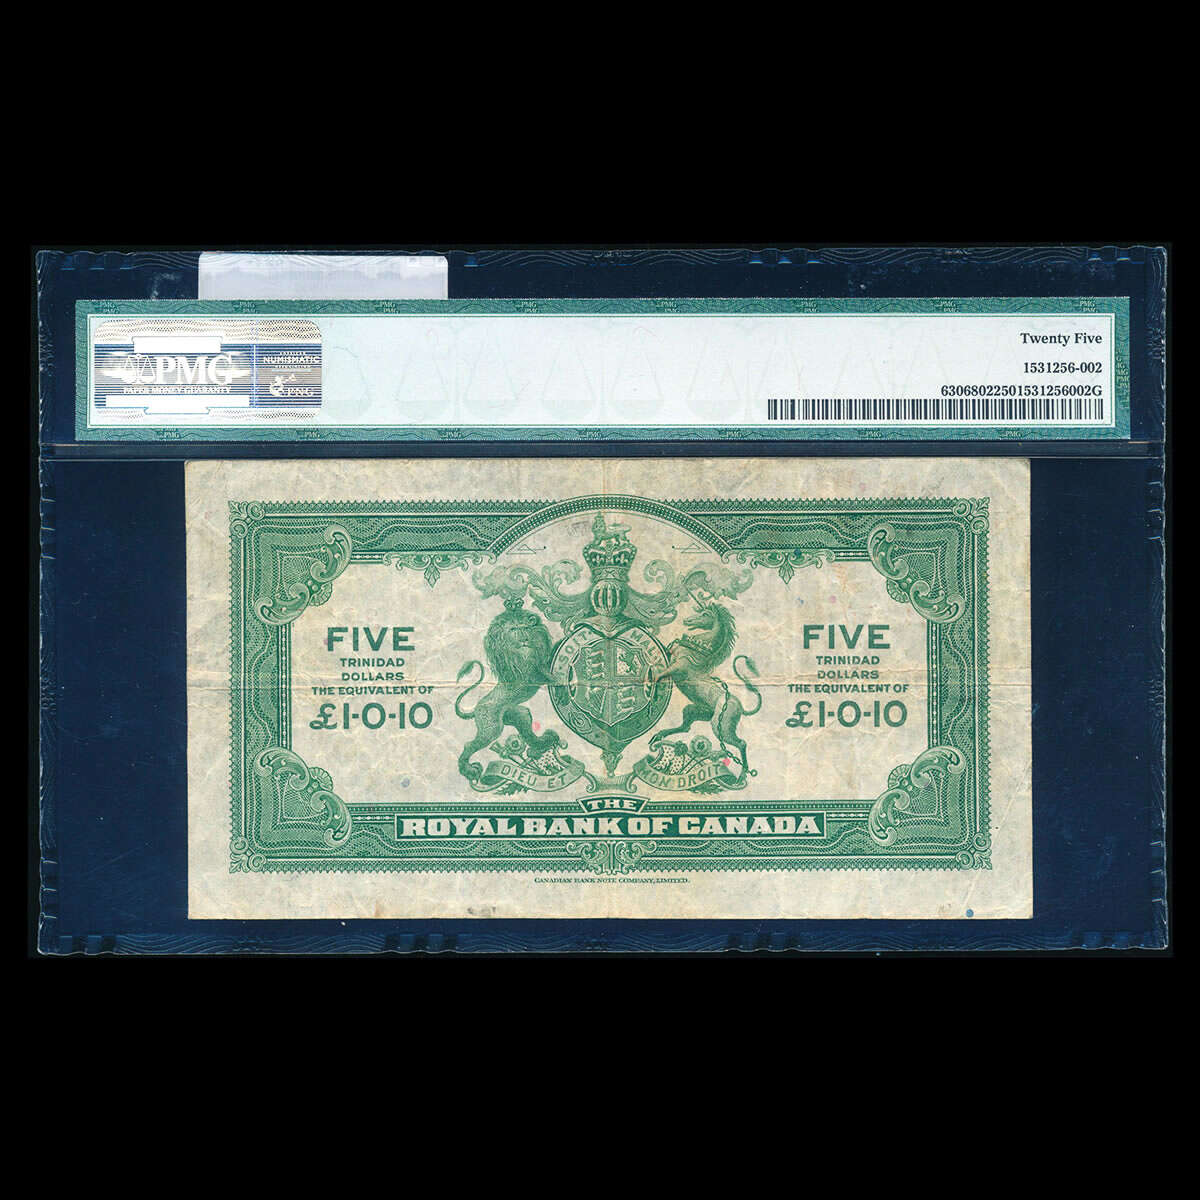 $5 1938 Royal Bank of Canada Port of Spain, Trinidad PMG VF-25